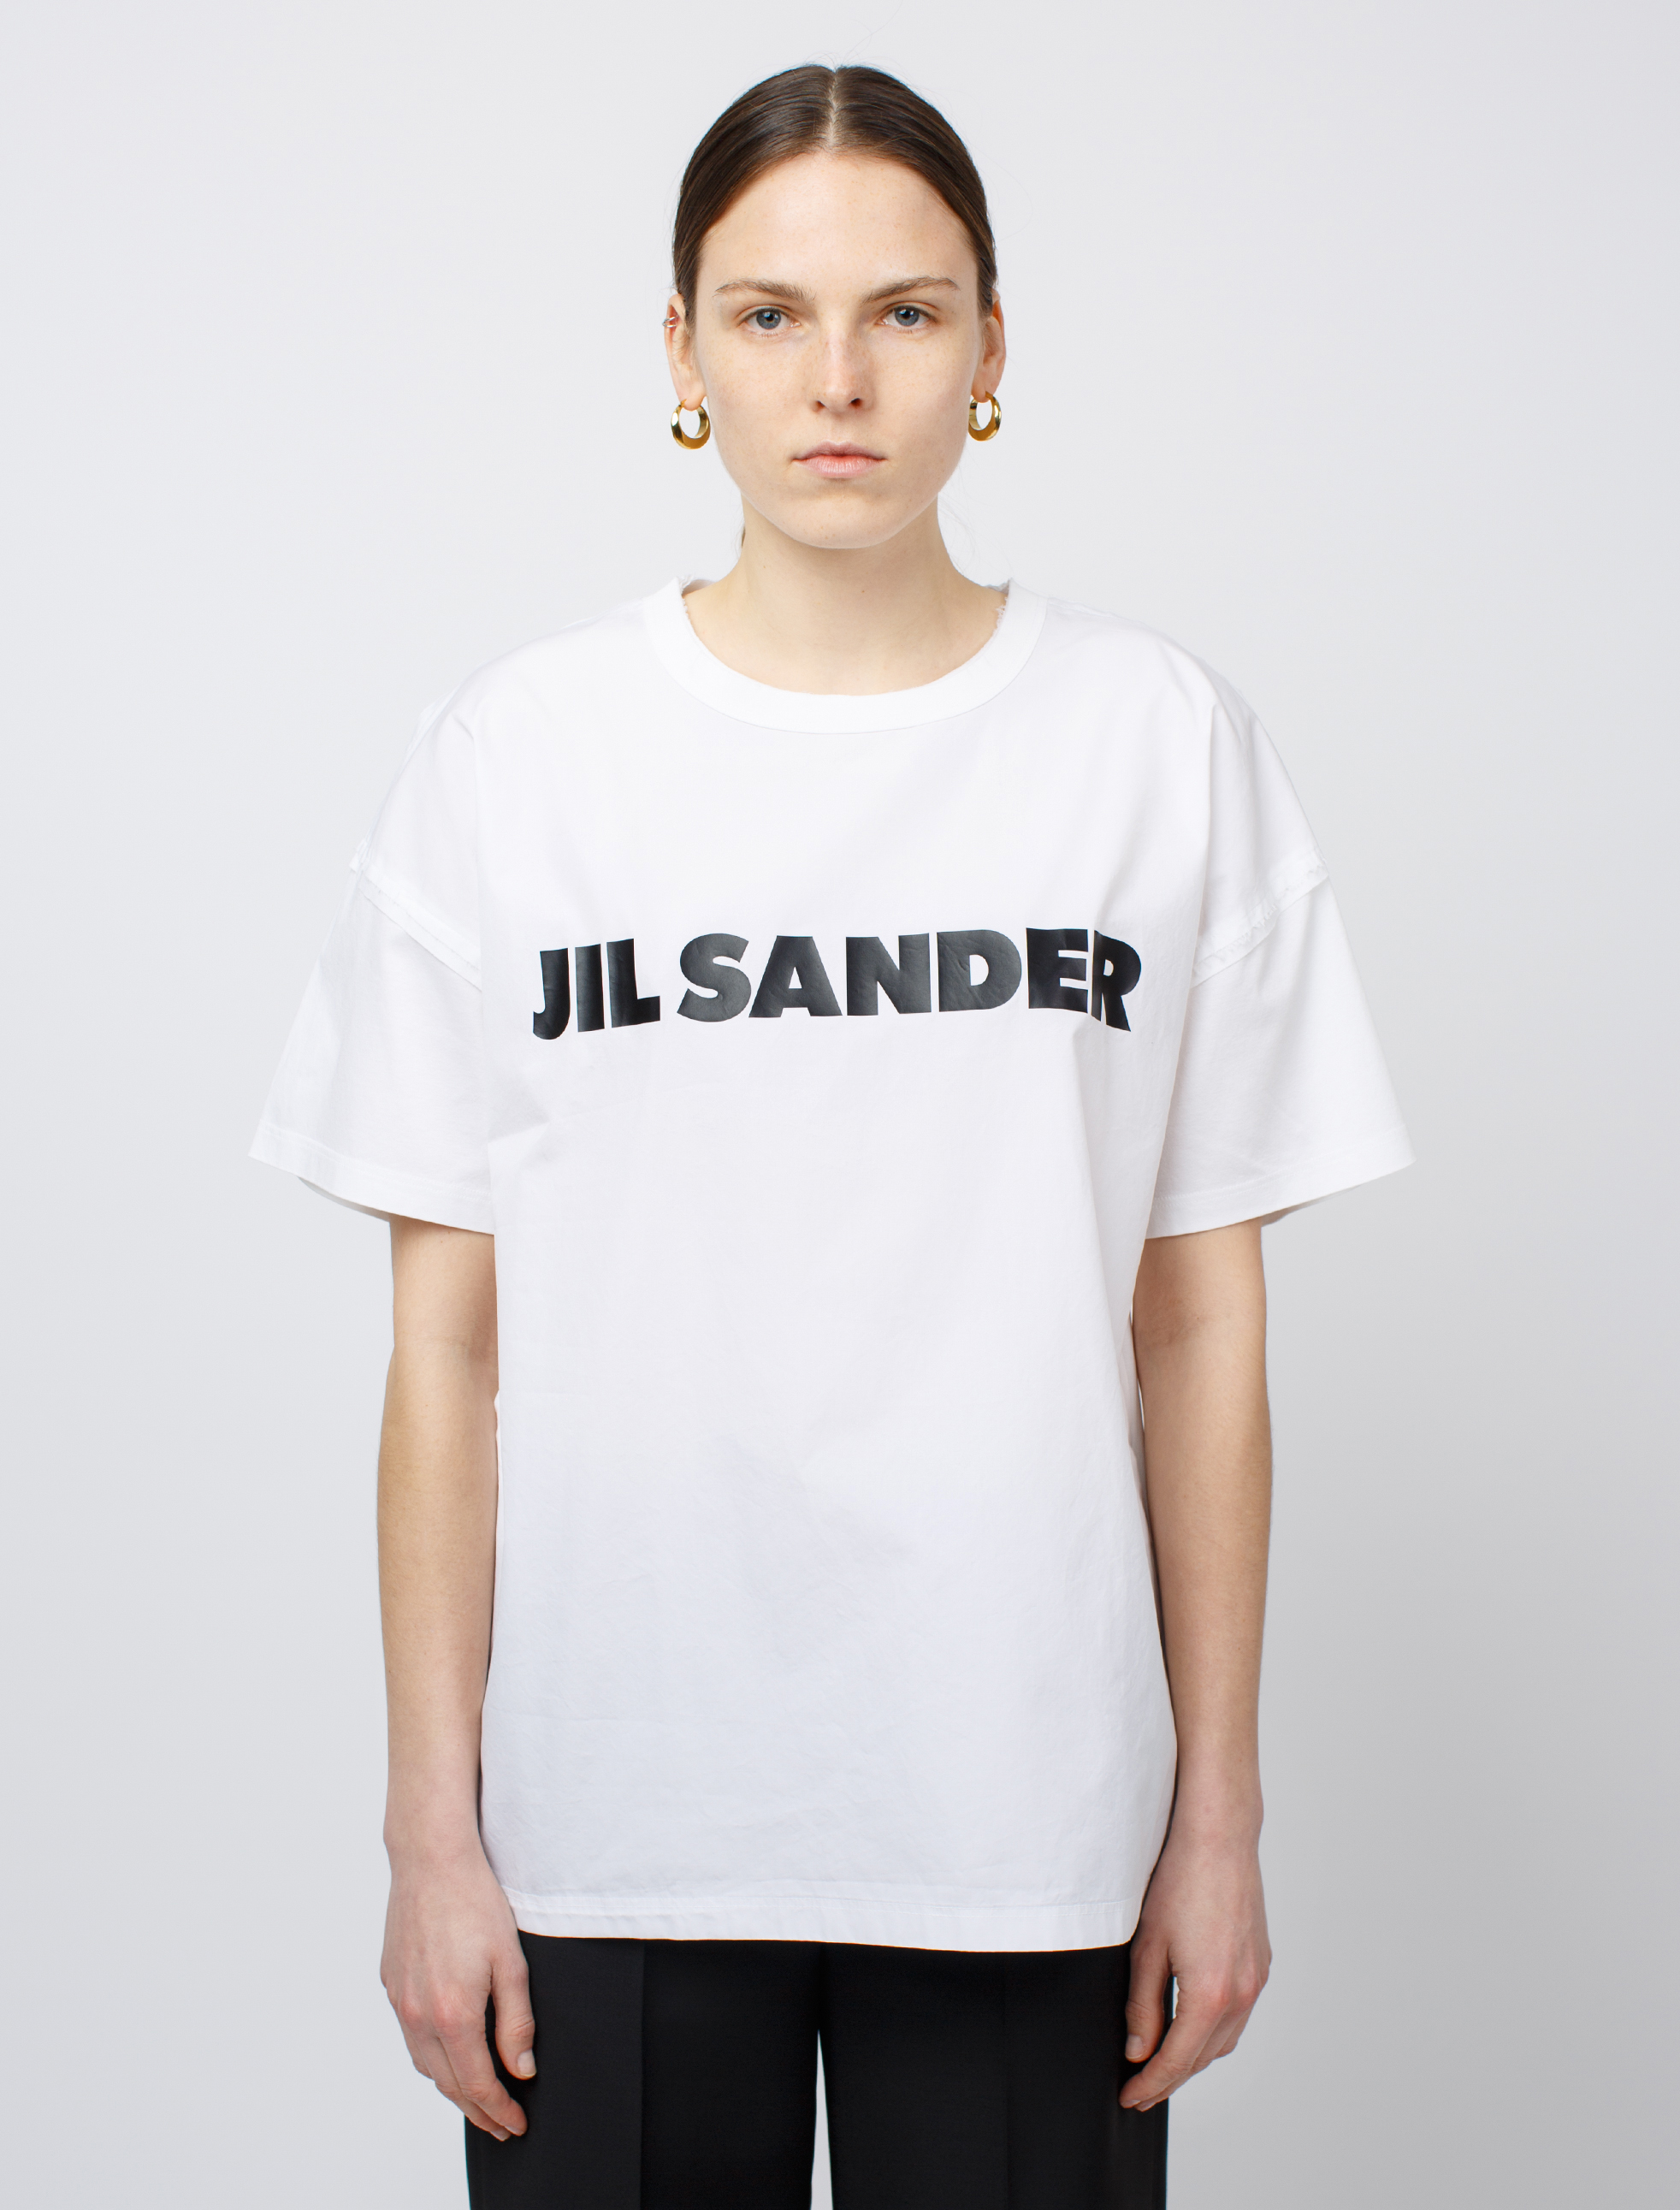 Jil Sander Shortsleeve Crewneck T-Shirt | Voo Store Berlin | Worldwide ...